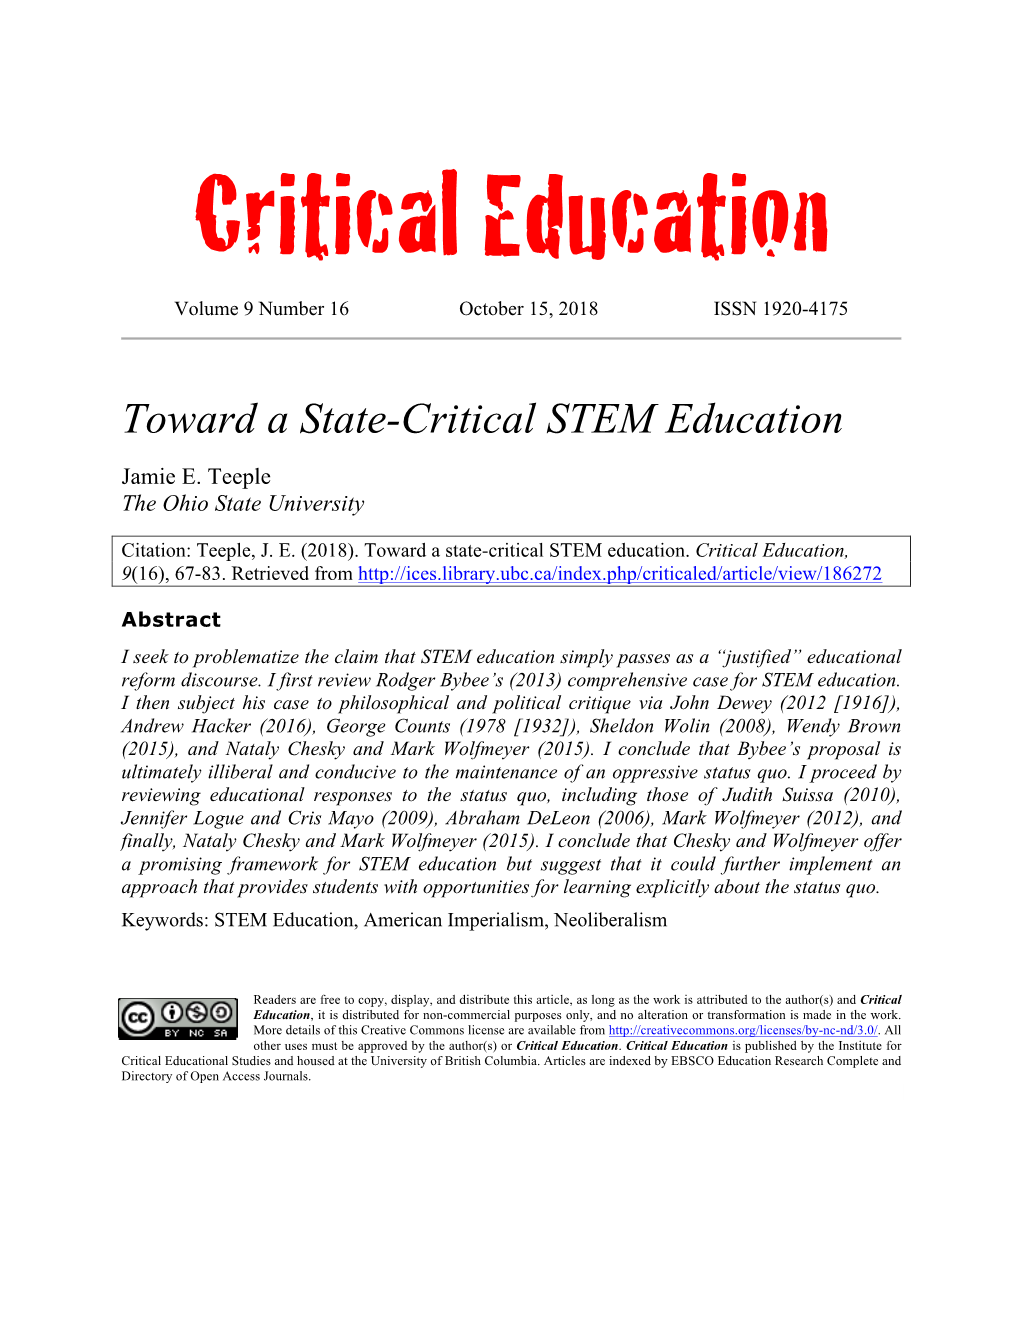 Toward a State-Critical STEM Education